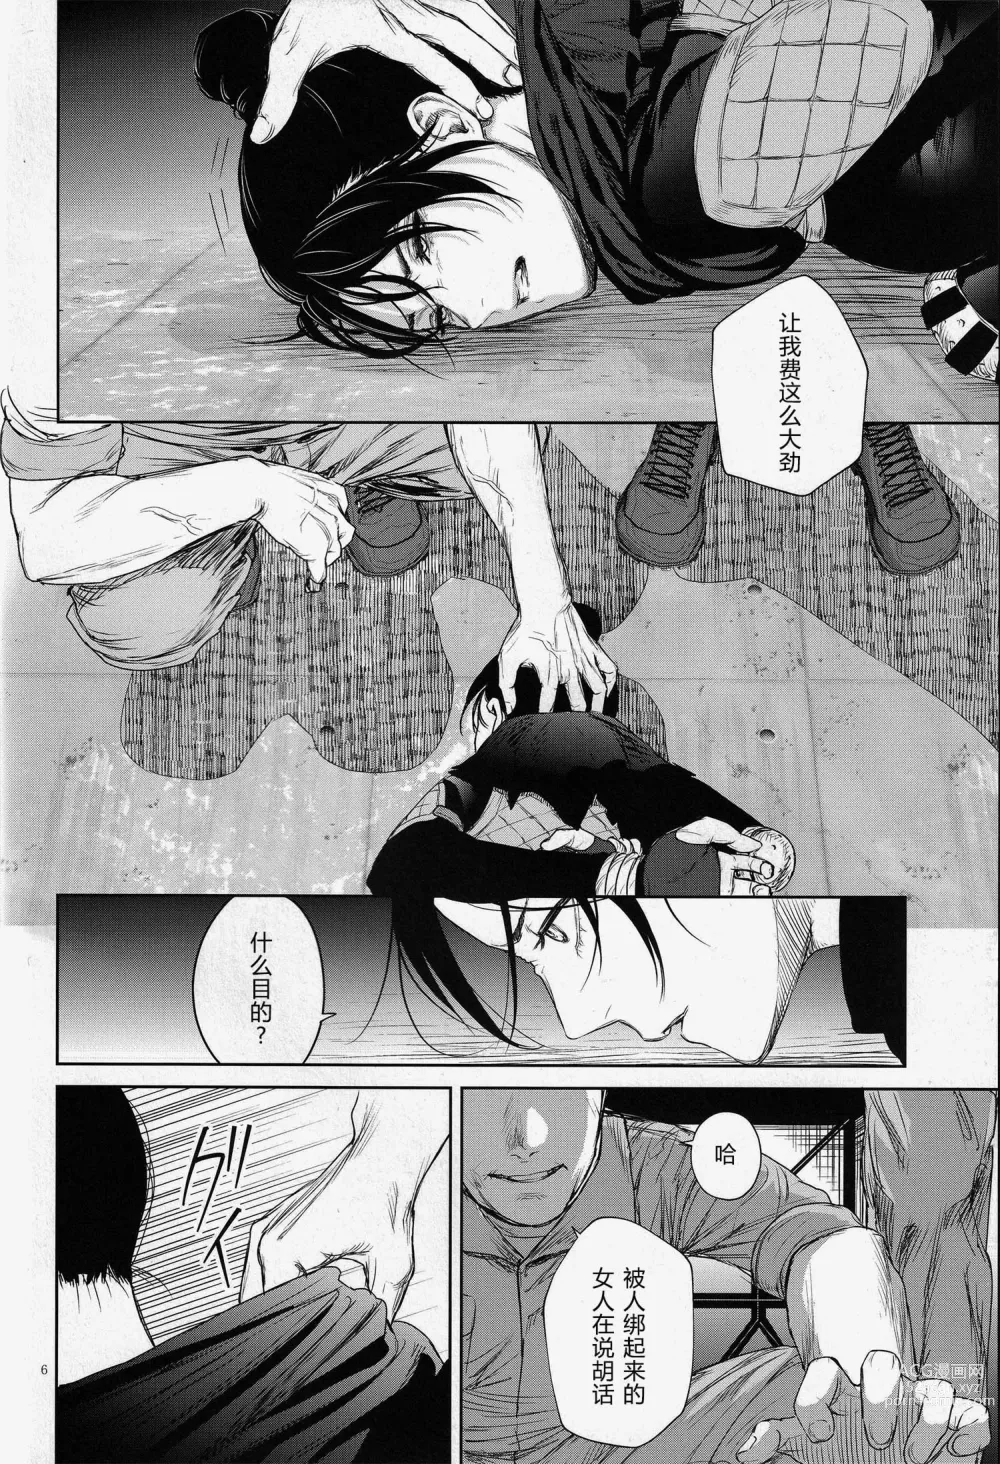 Page 5 of doujinshi Daishou no Hate